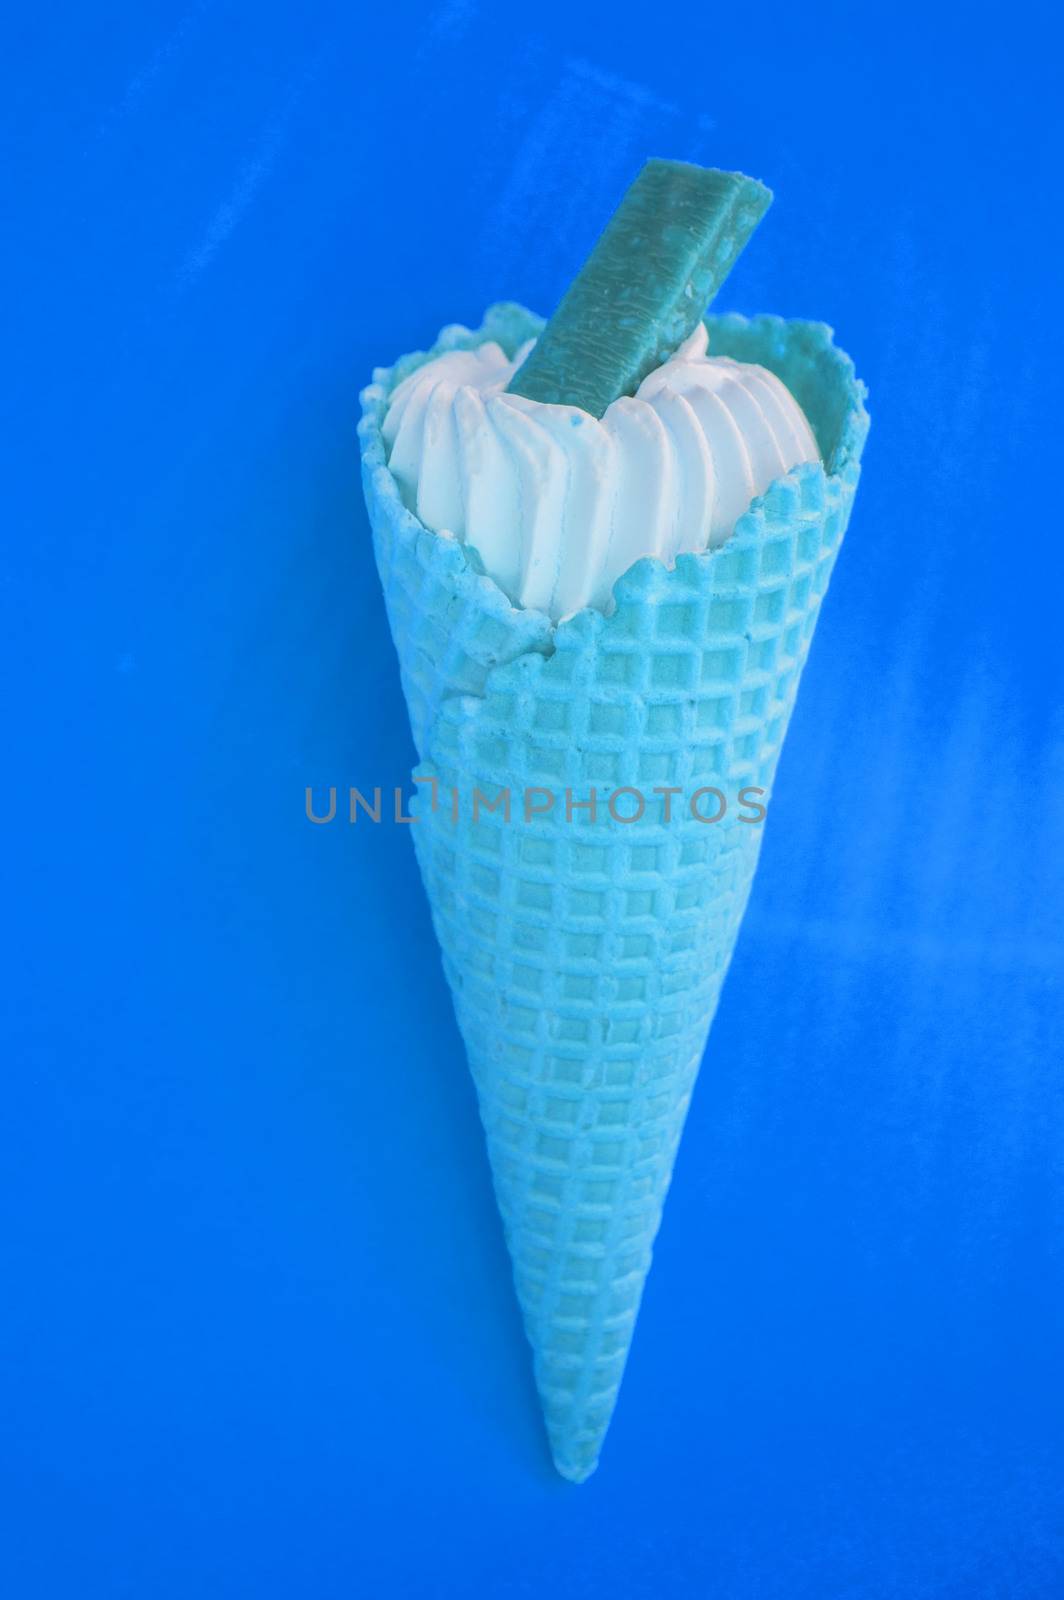 Ice cream CONE NEON COLORS pop art Flatley art, blue background.